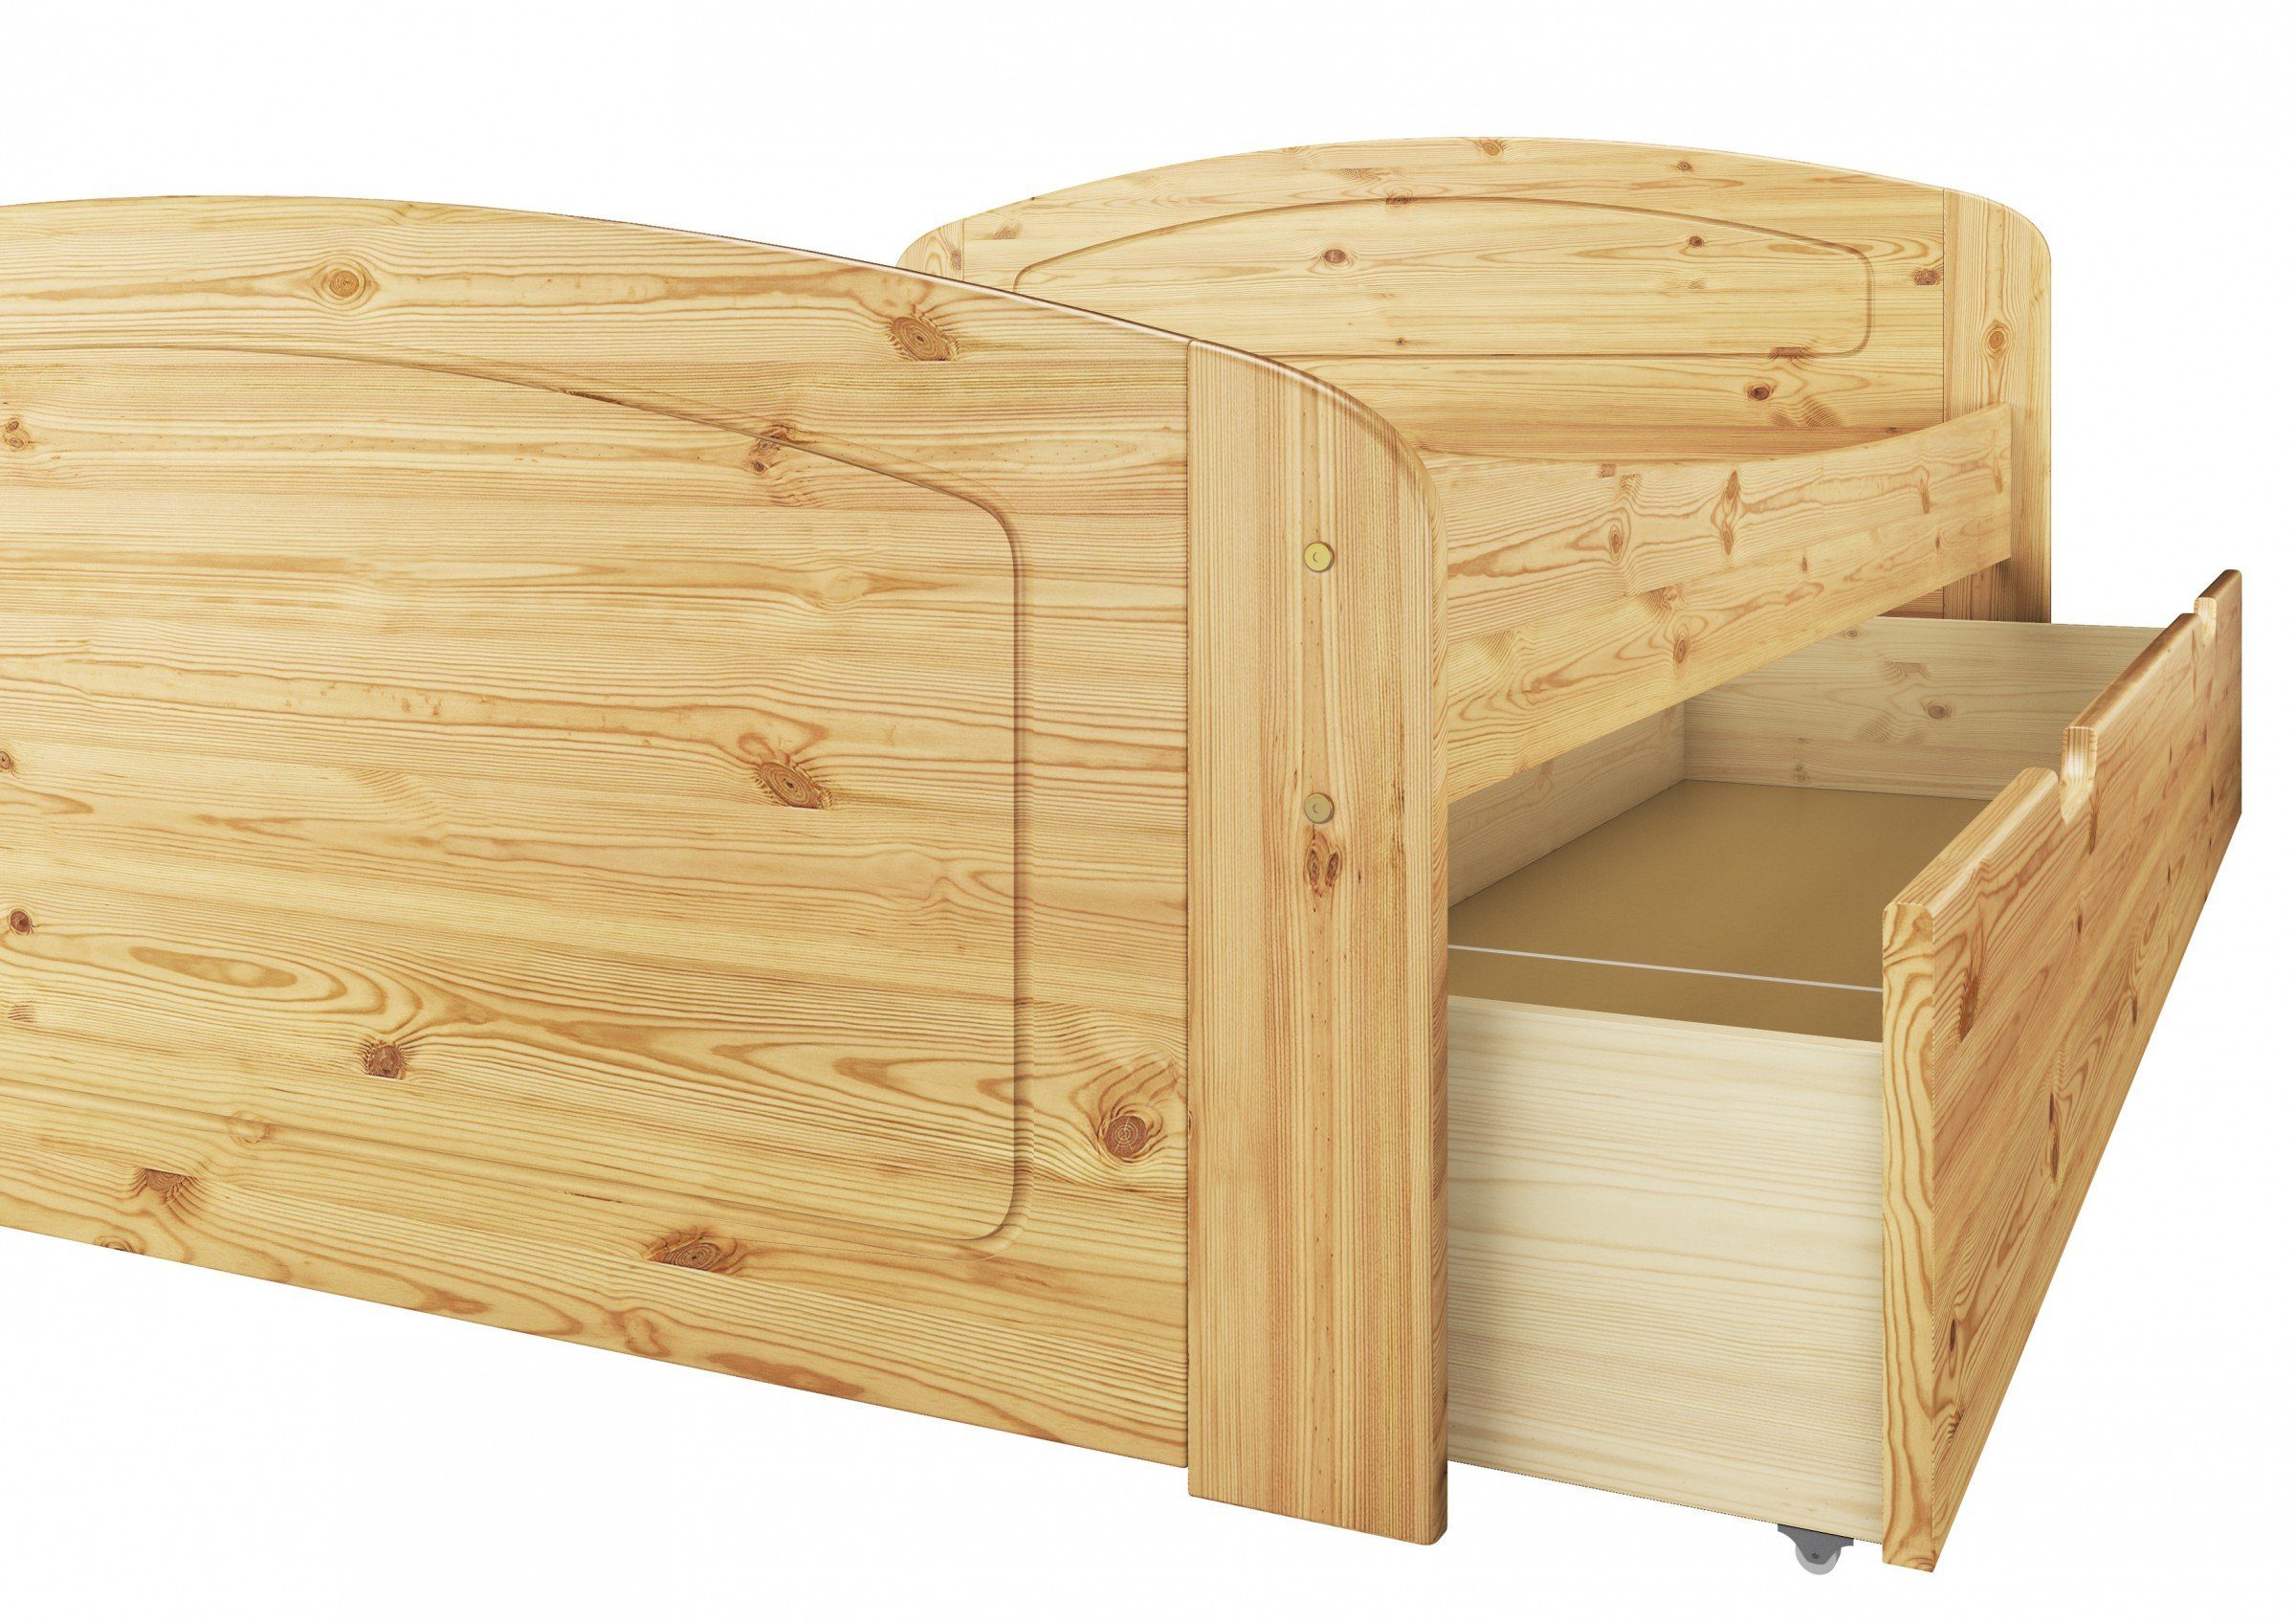 ERST-HOLZ Bett Doppelbett 180x200 Kiefer lackiert Kiefer Kieferfarblos Bettkasten mit 3 + Rollrost